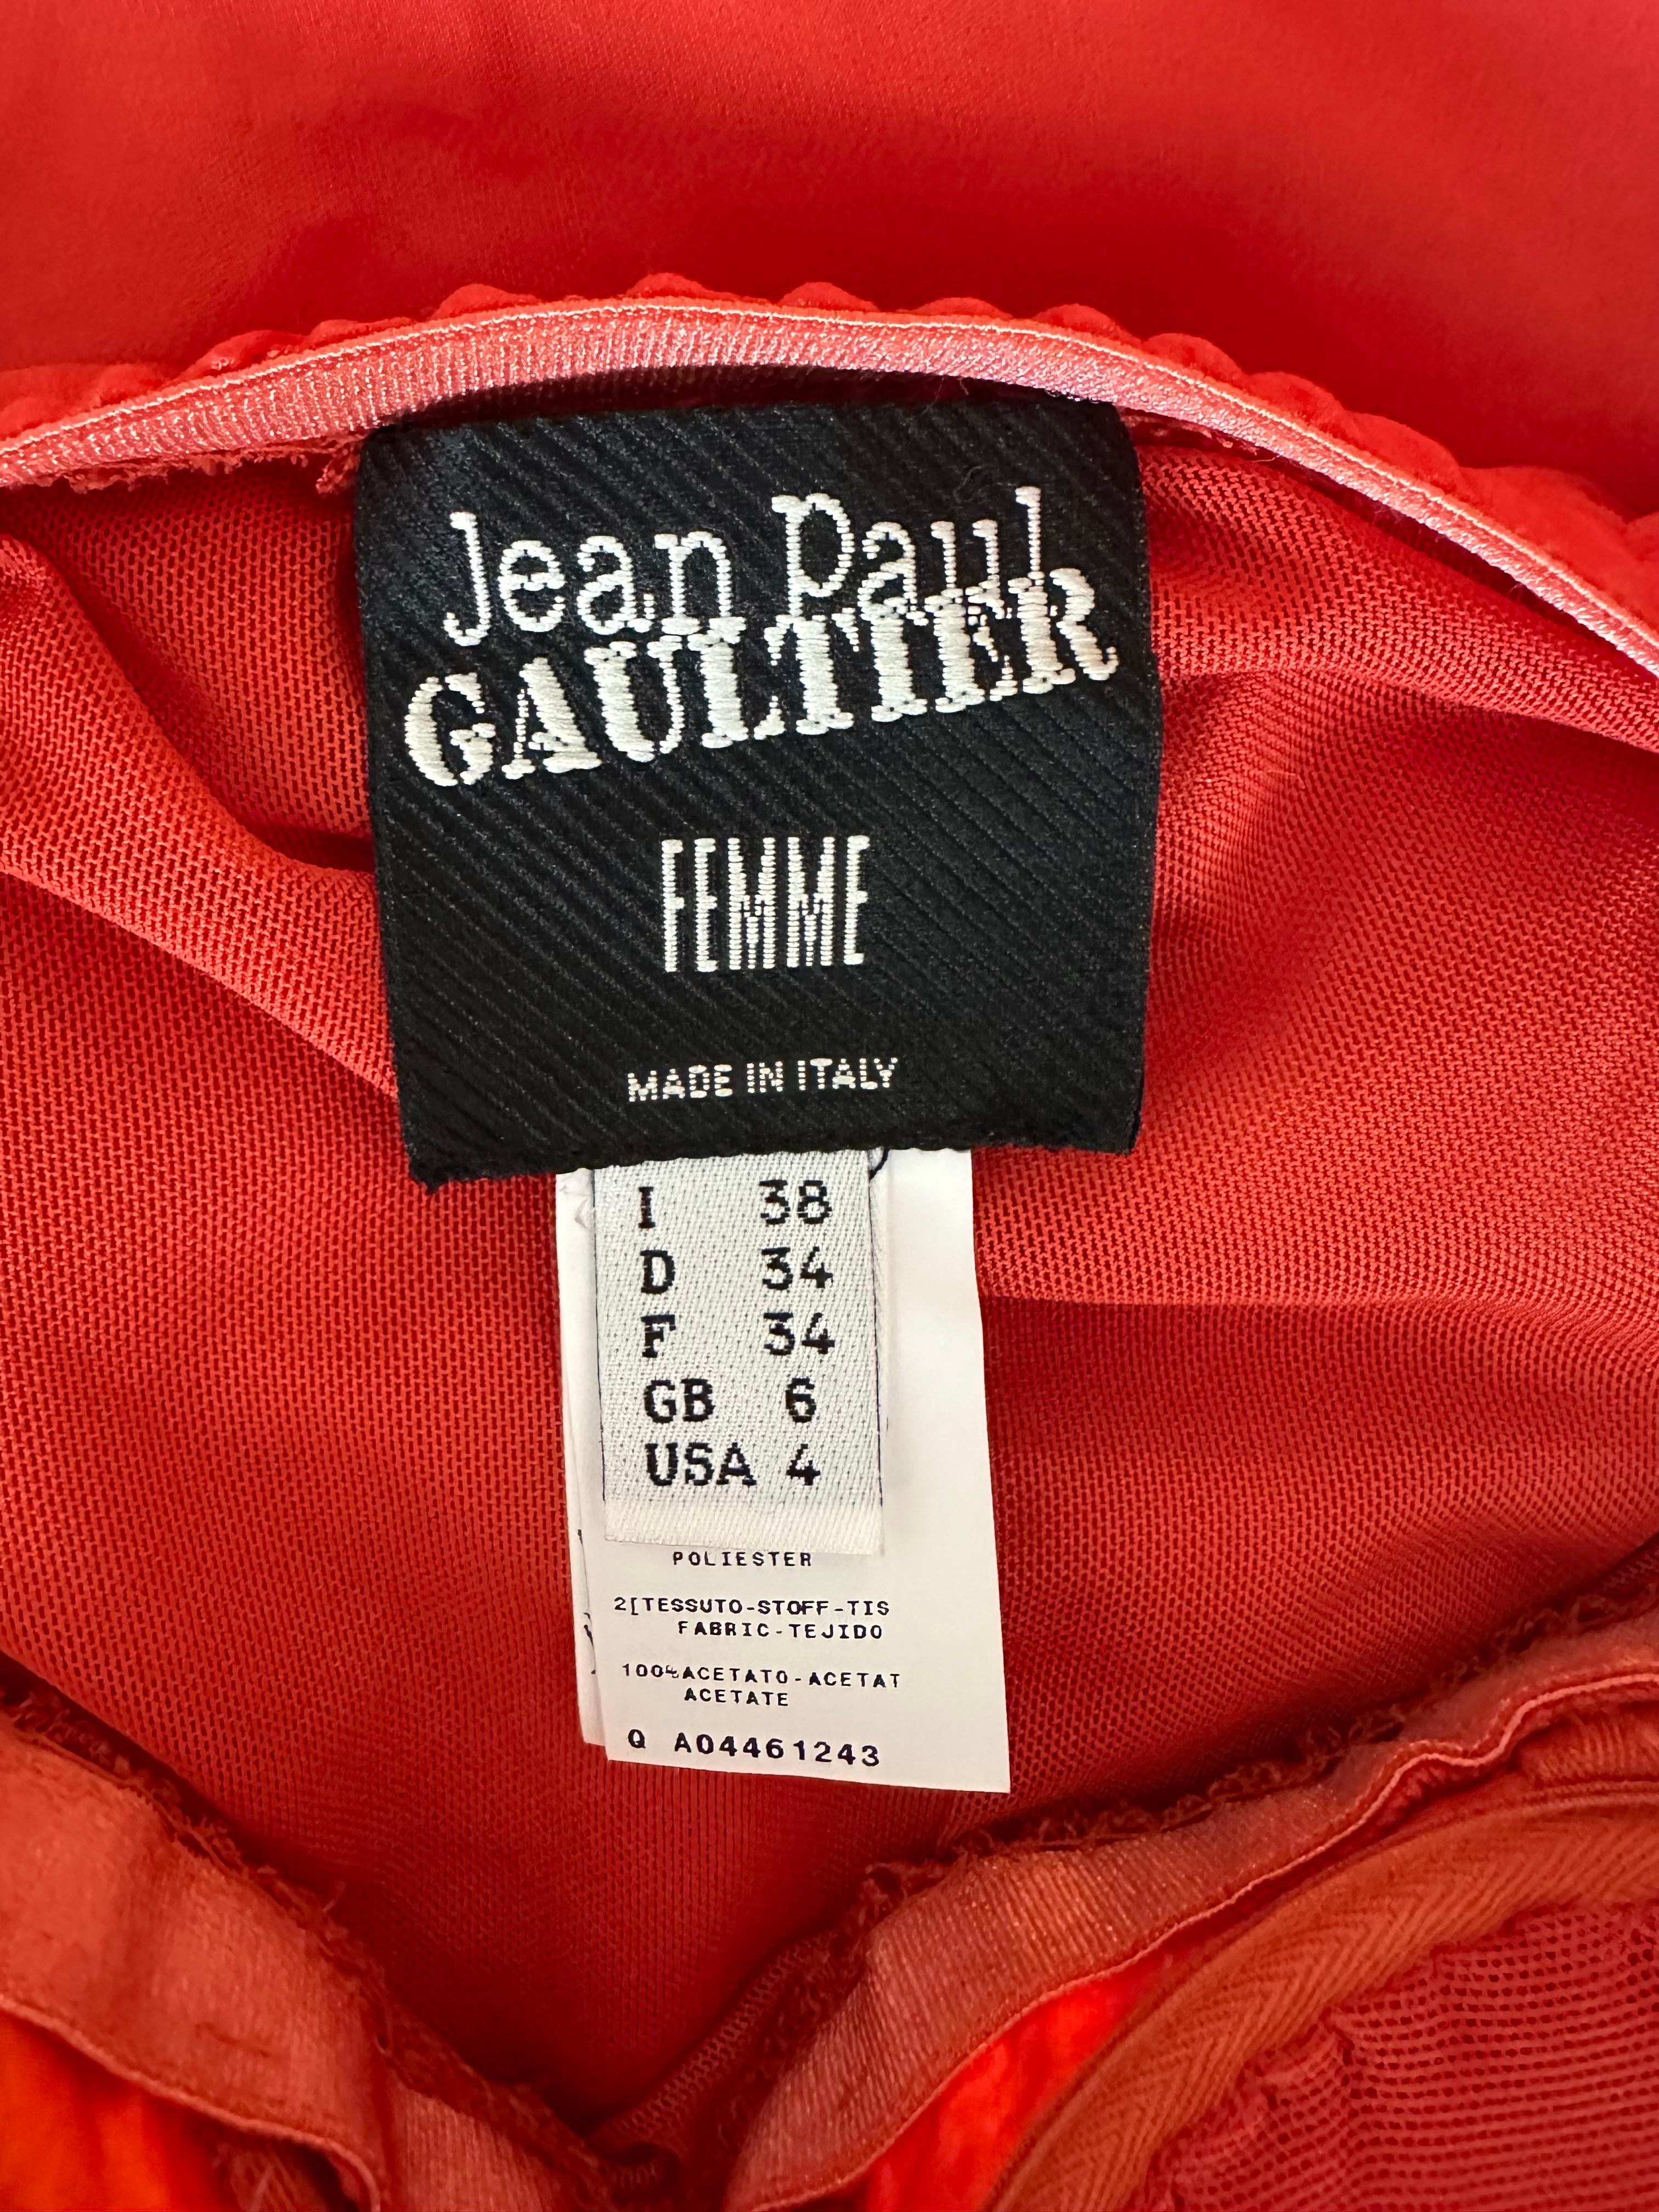 Jean Paul Gaultier S/S 2010 Runway Cone Bra Bustier Red Romper Jumpsuit For Sale 8